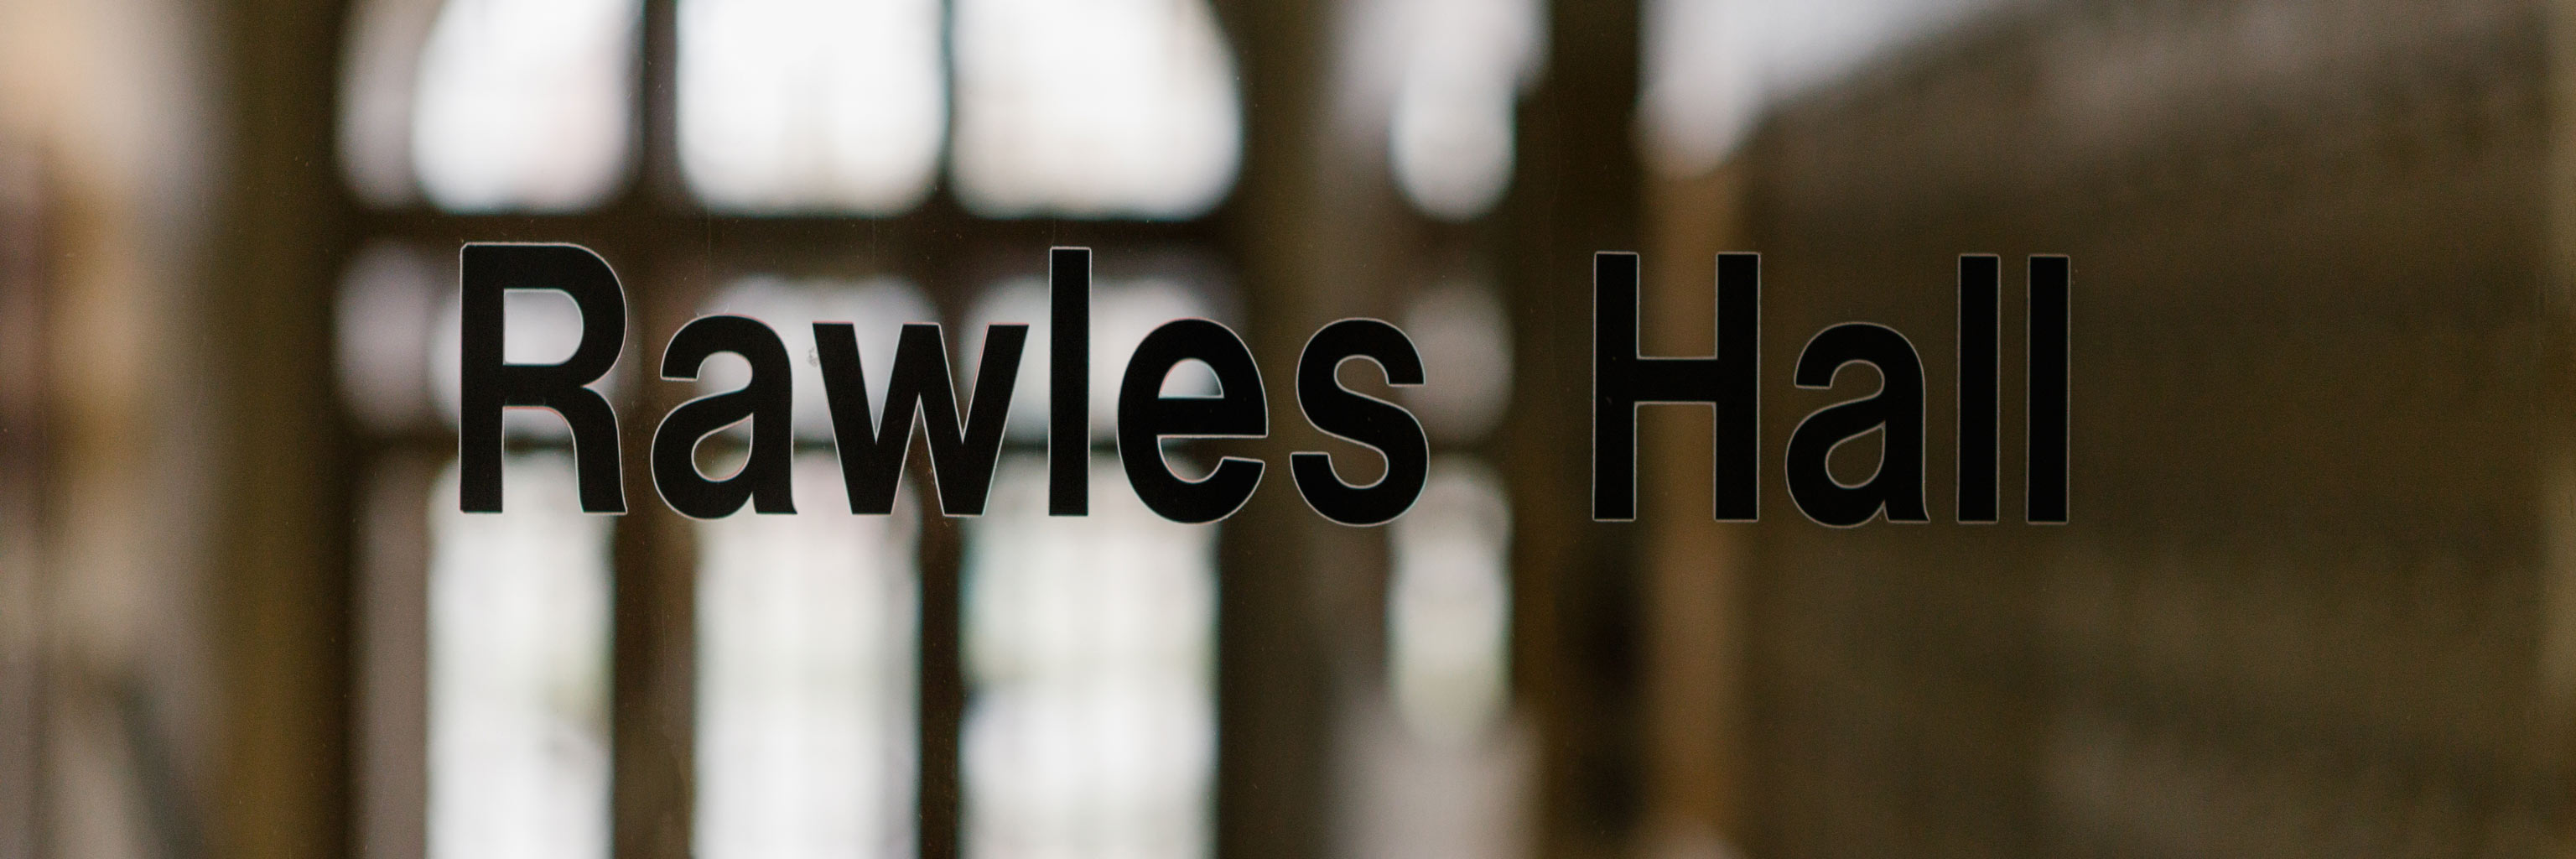 Rawles Hall title card